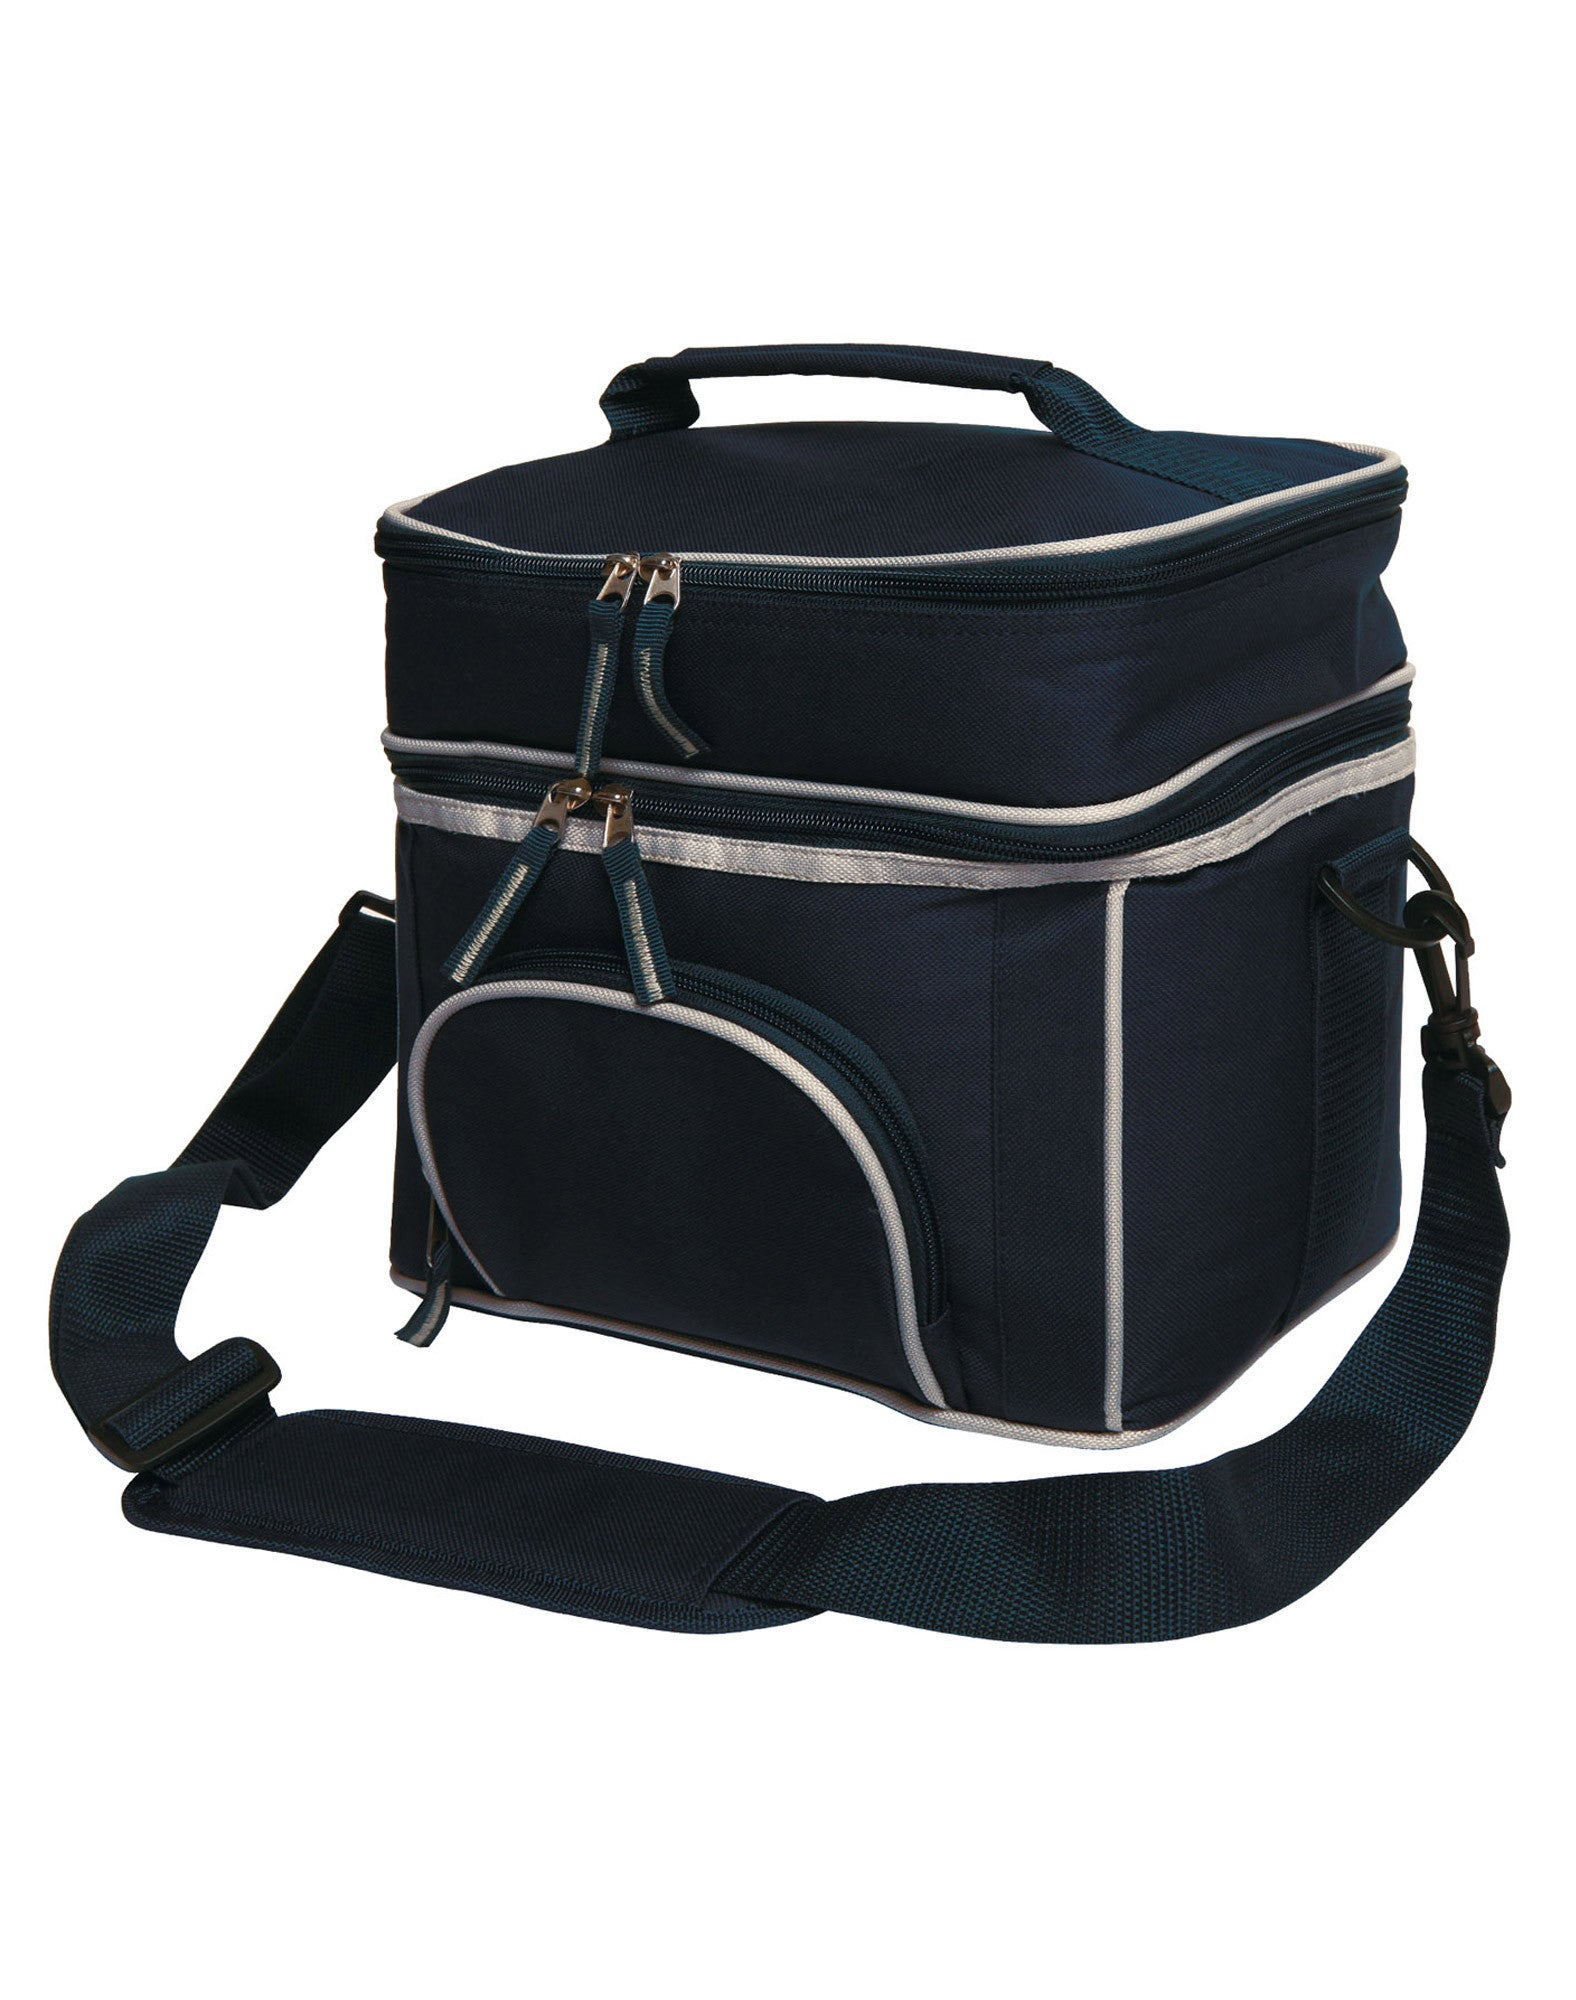 Winning Spirit Travel Cooler Bag - Lunch/Picnic (B6002)